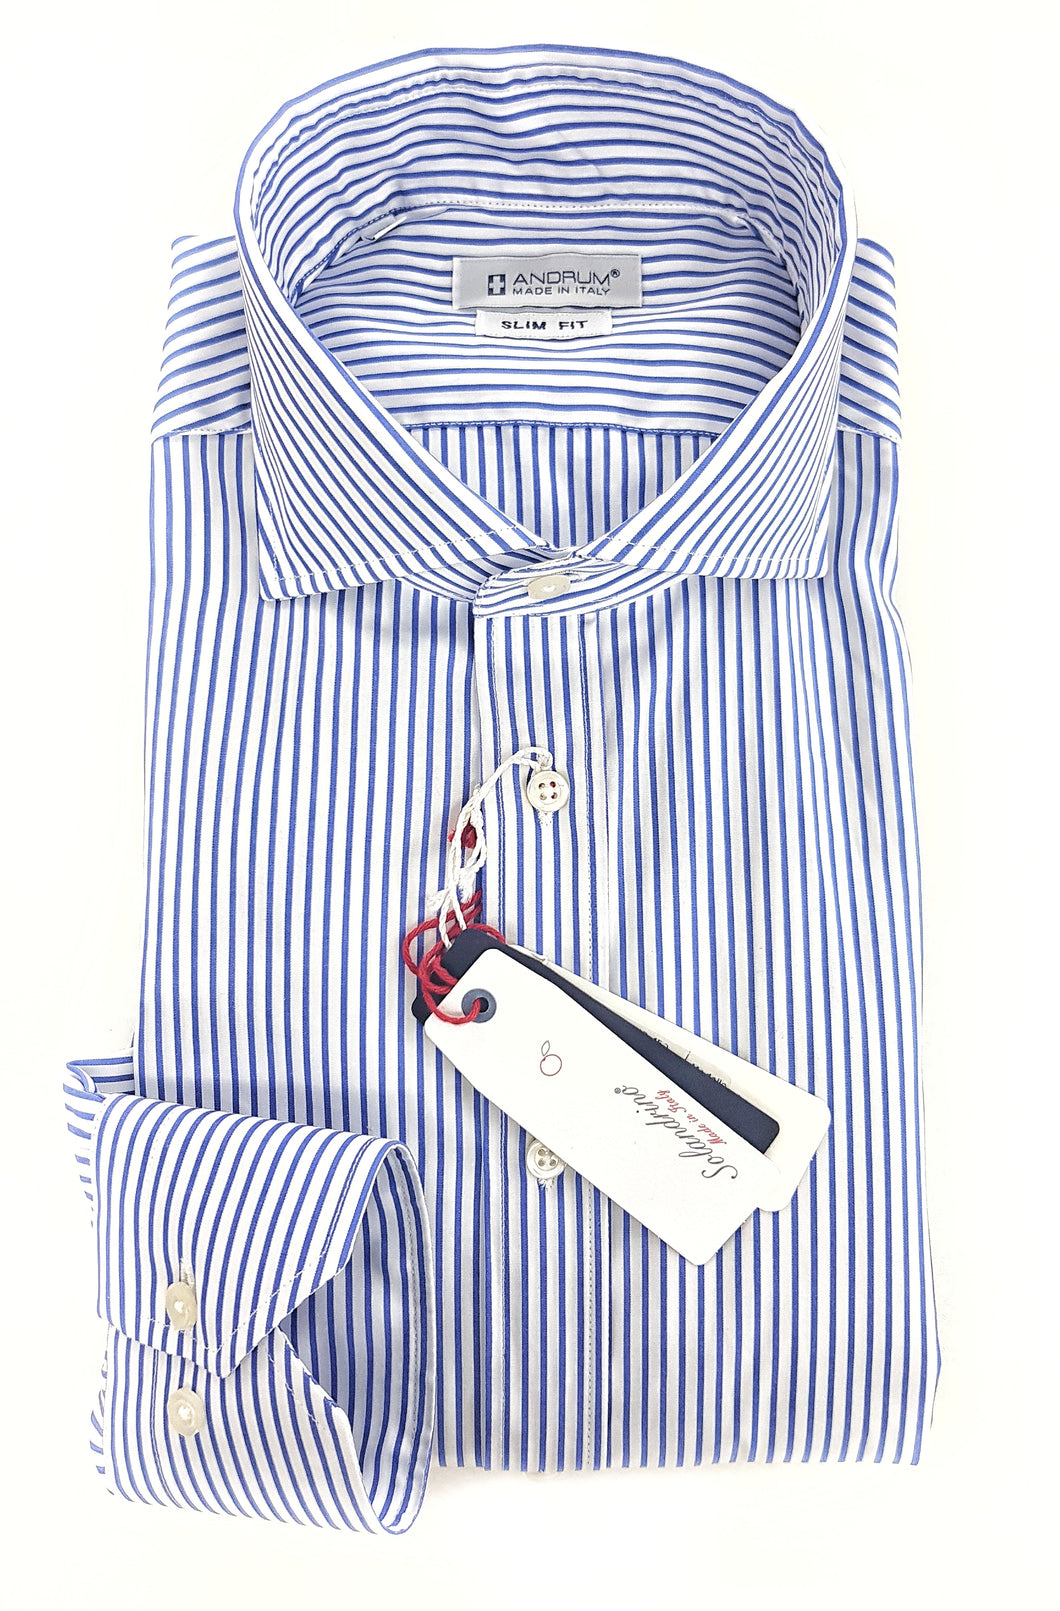 Camicia rigata Uomo puro cotone alta qualità made in italy men shirt blue stripe high quality